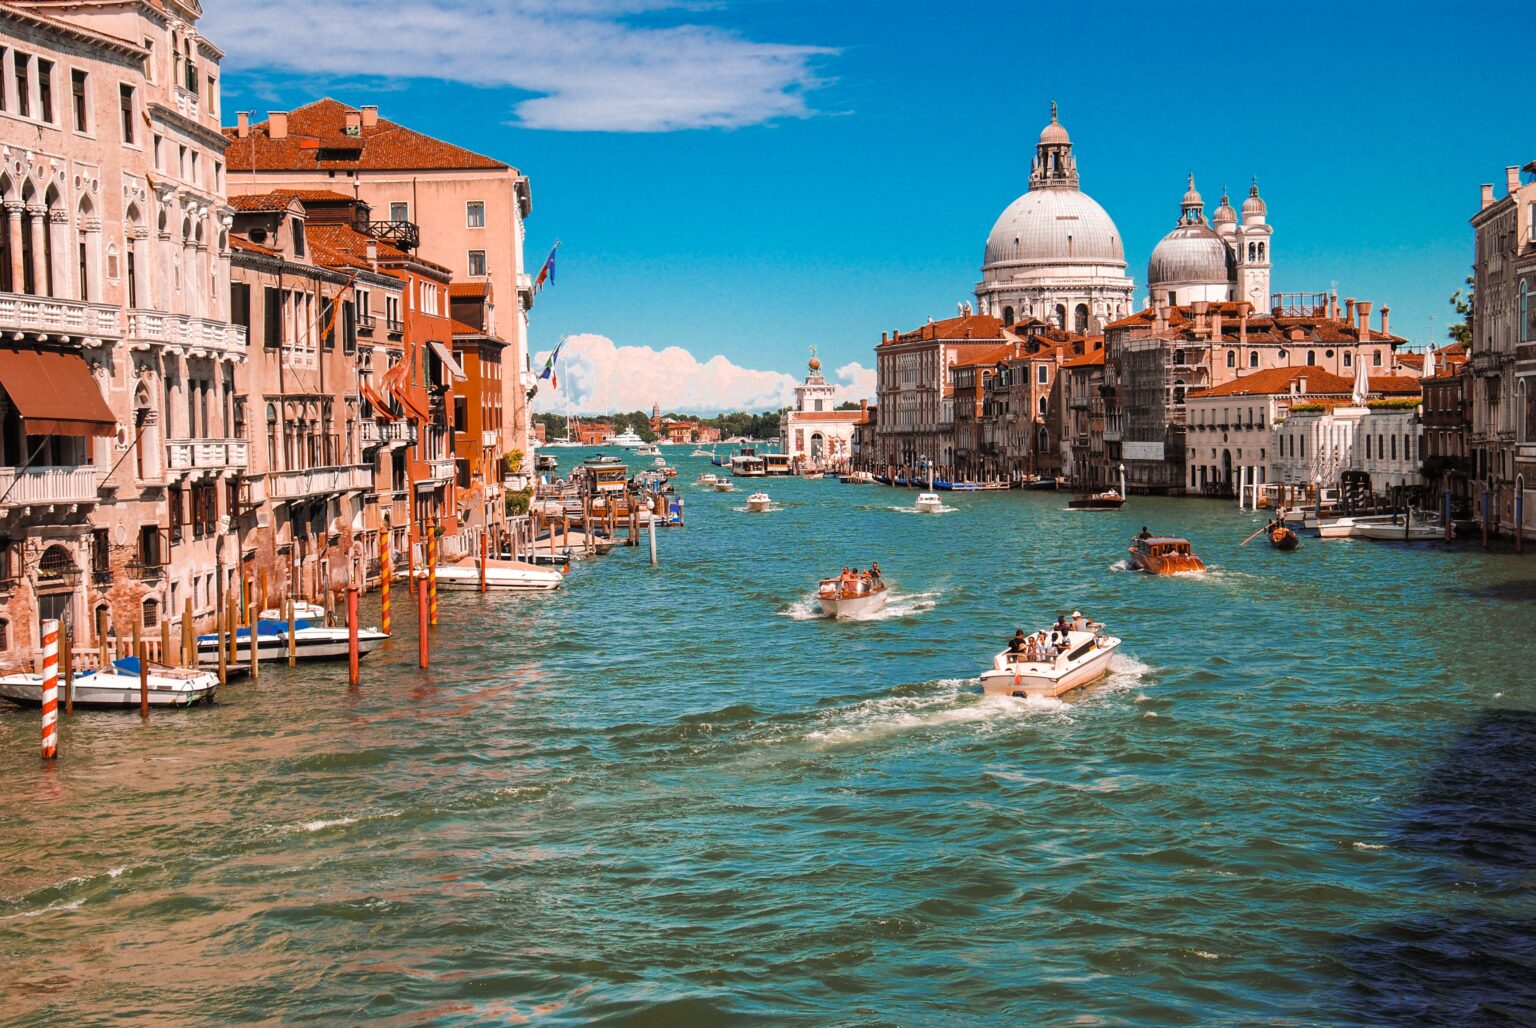 Waterways of Venice,